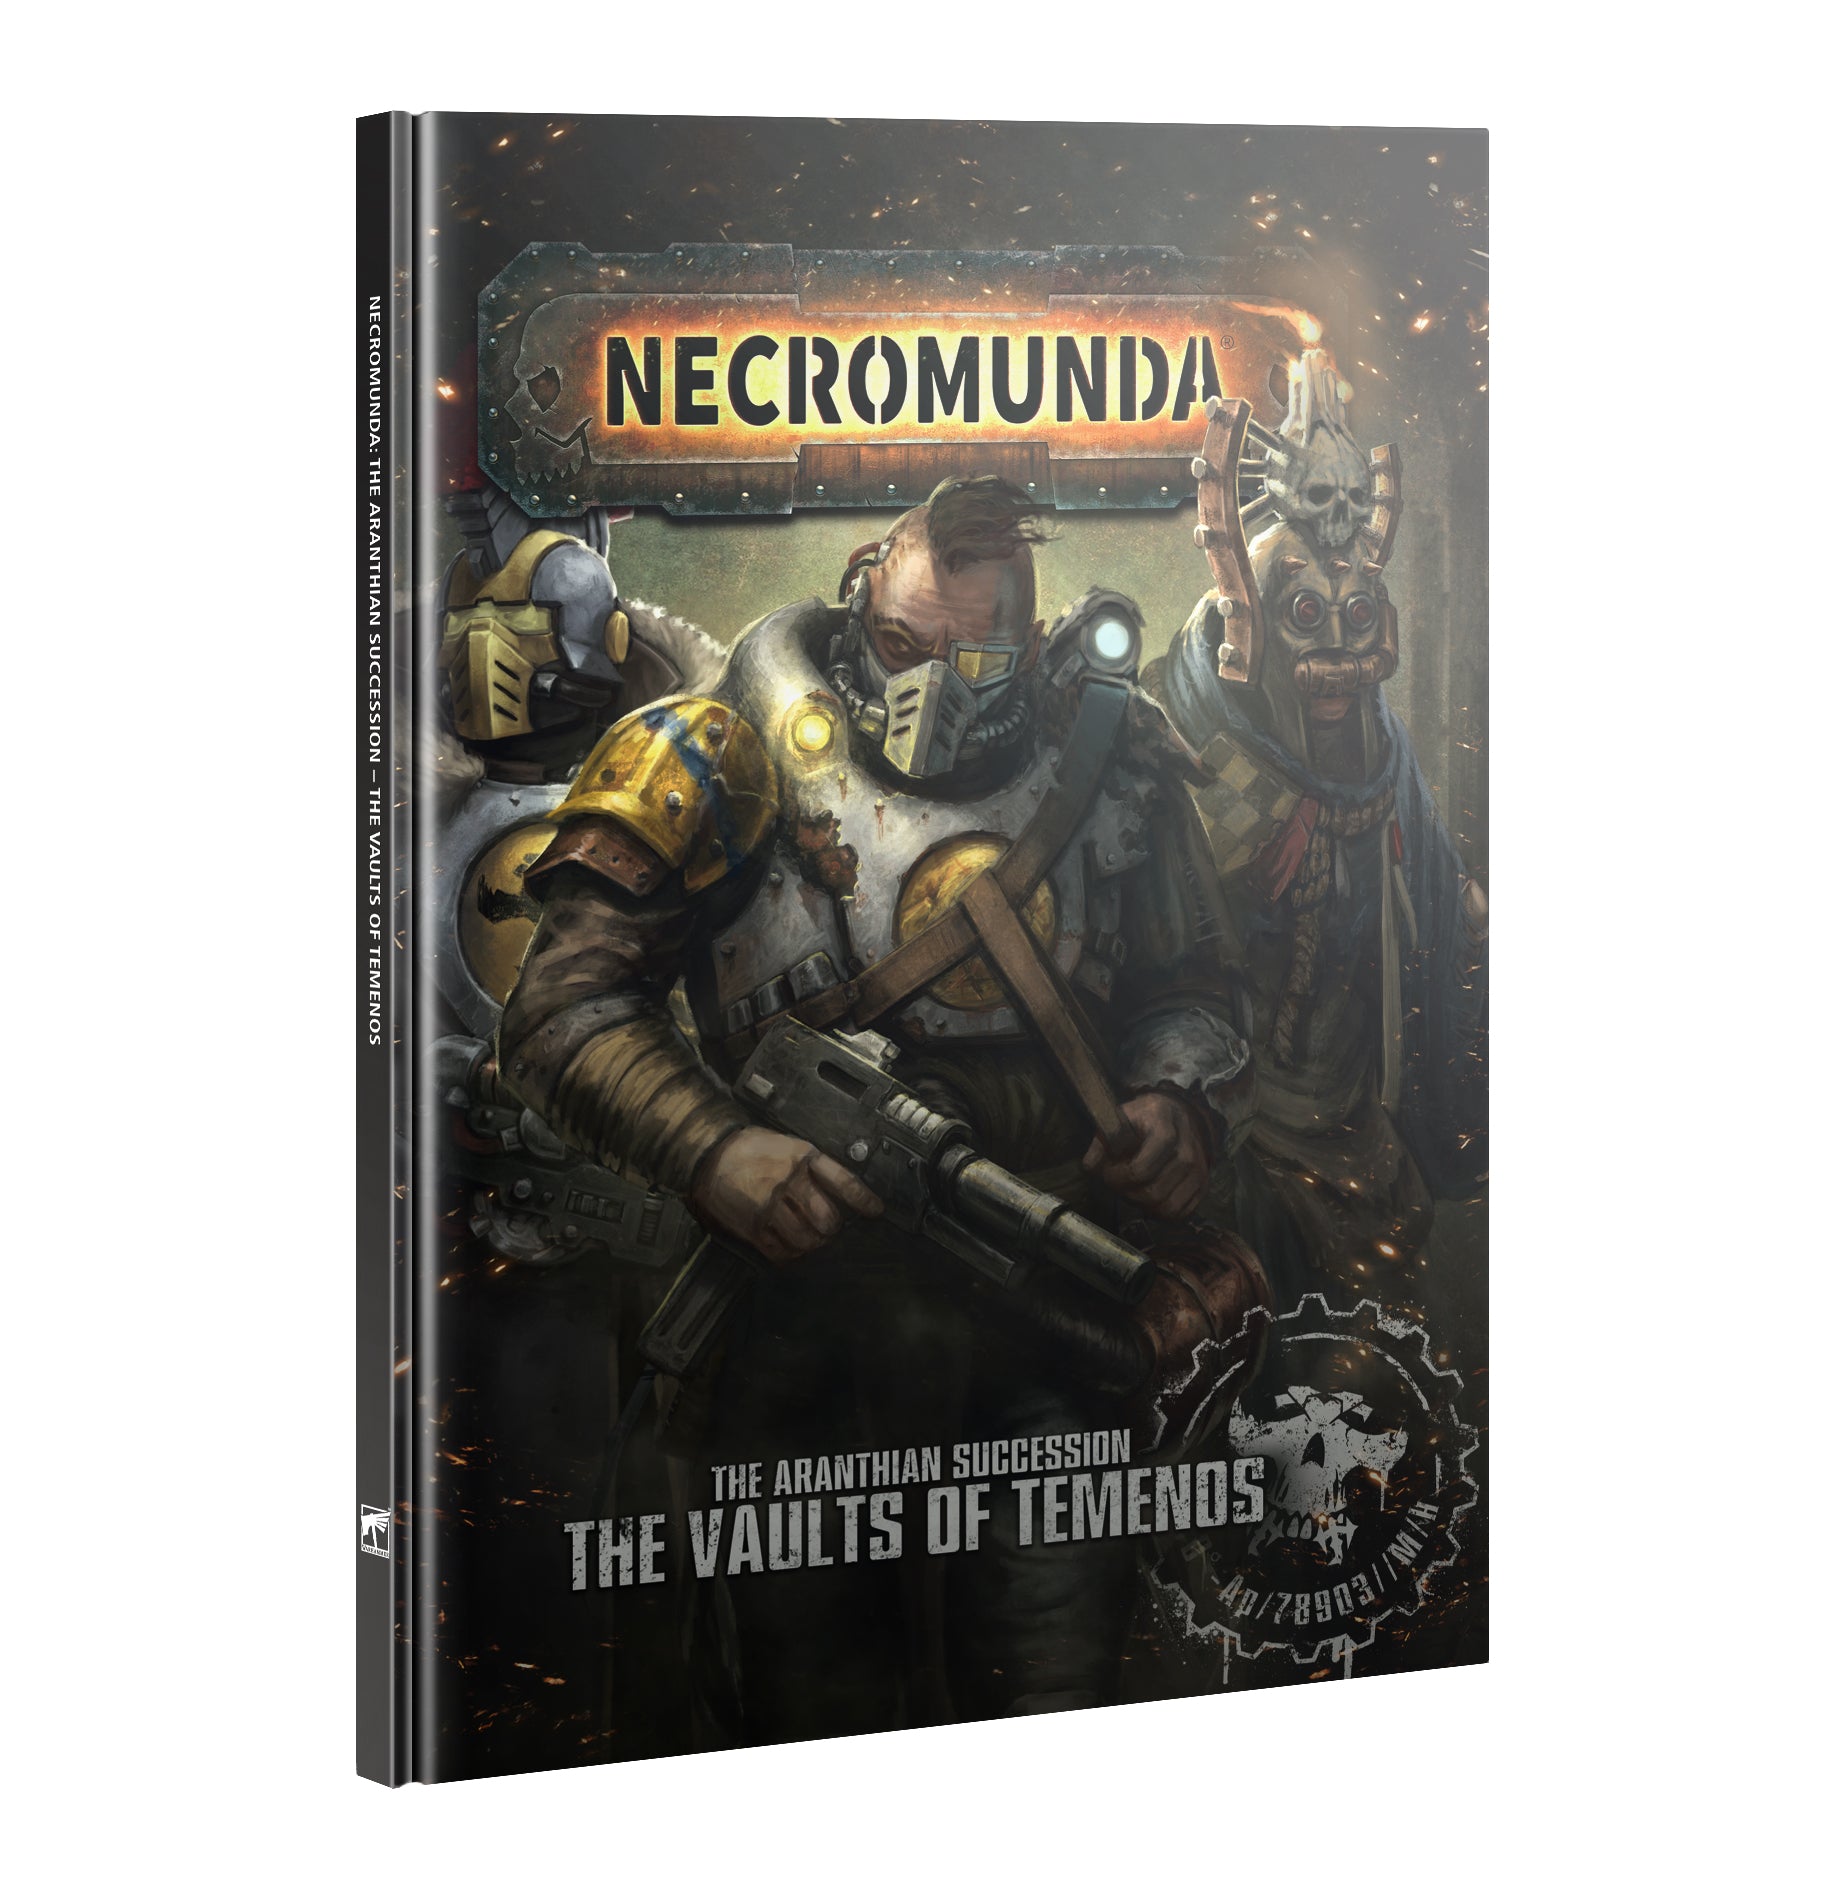 a book cover for necomunda the vaults of demons